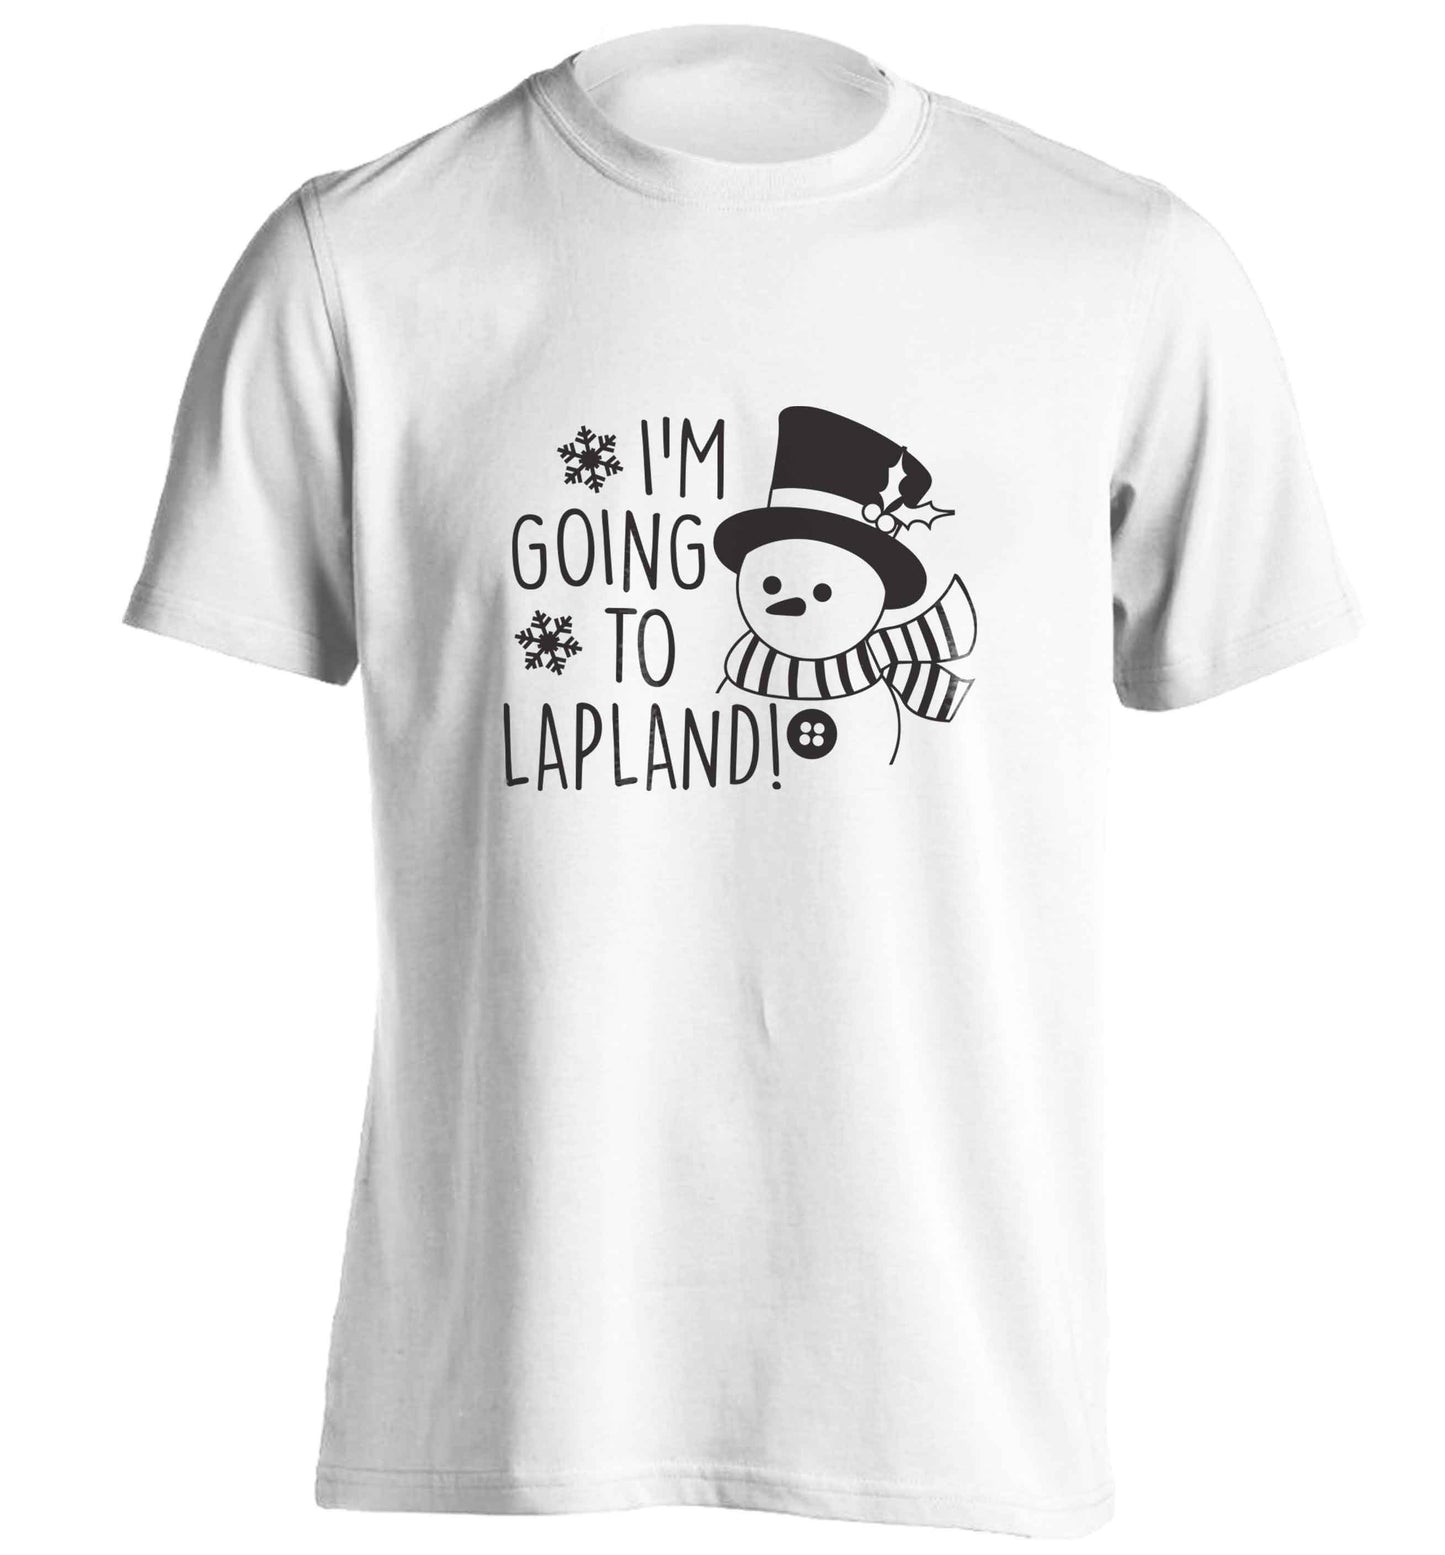 I'm going to Lapland adults unisex white Tshirt 2XL